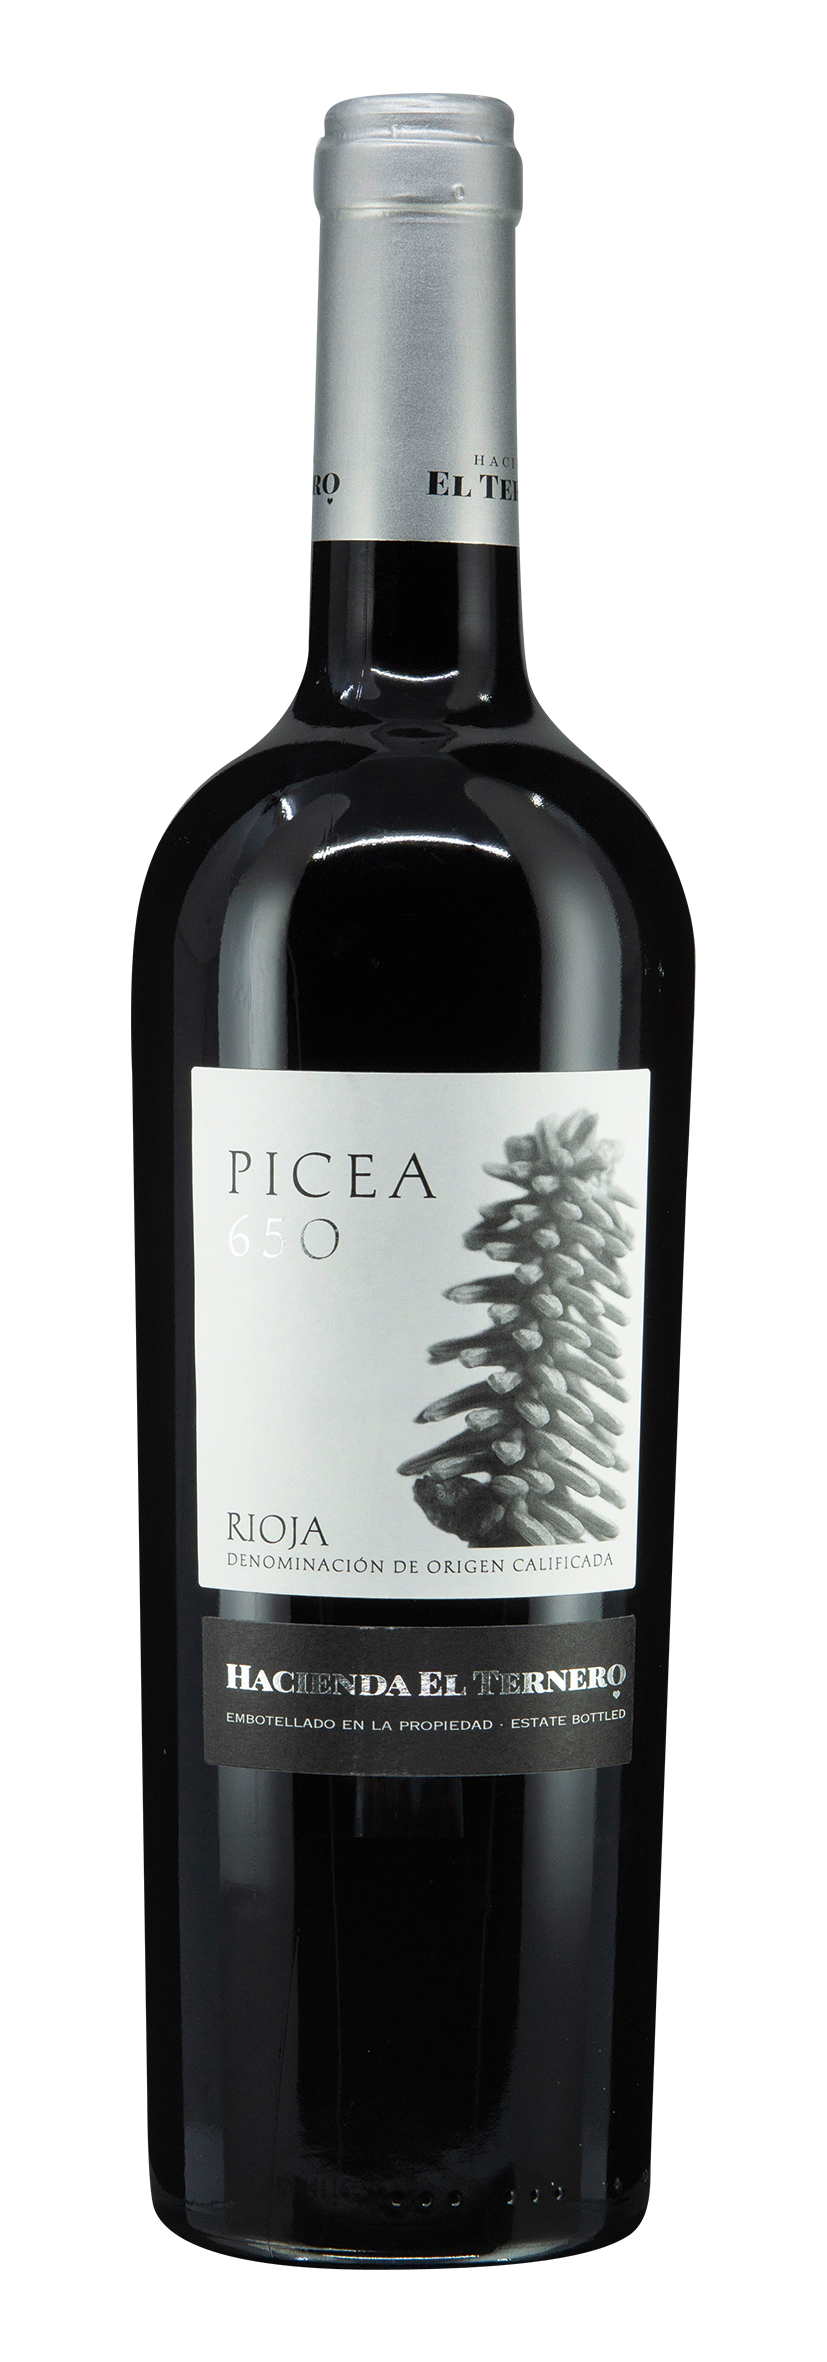 Rioja DOCa Picea 650 2013